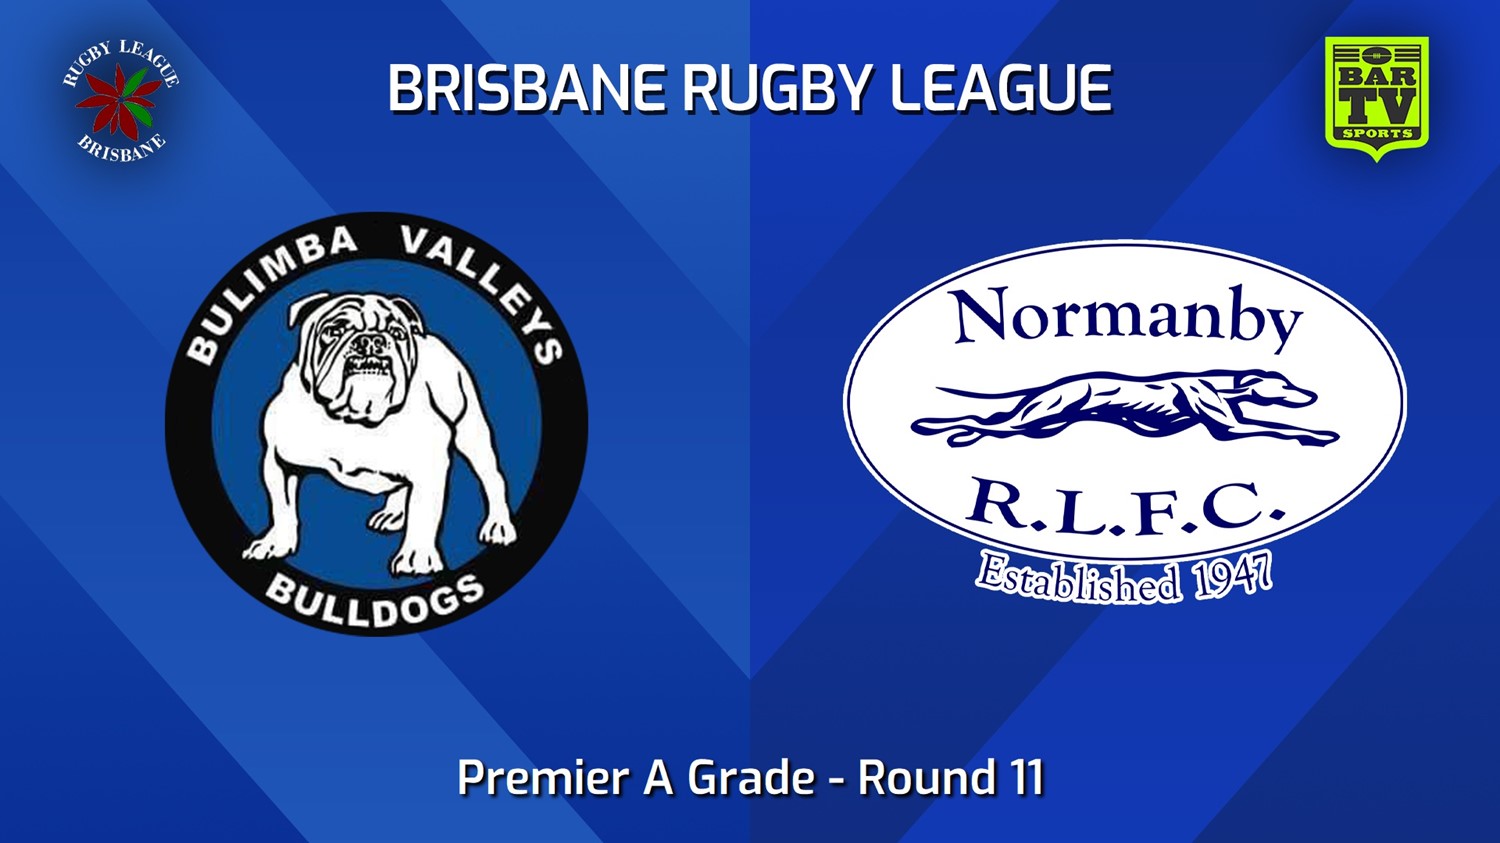 240622-video-BRL Round 11 - Premier A Grade - Bulimba Valleys Bulldogs v Normanby Hounds Minigame Slate Image